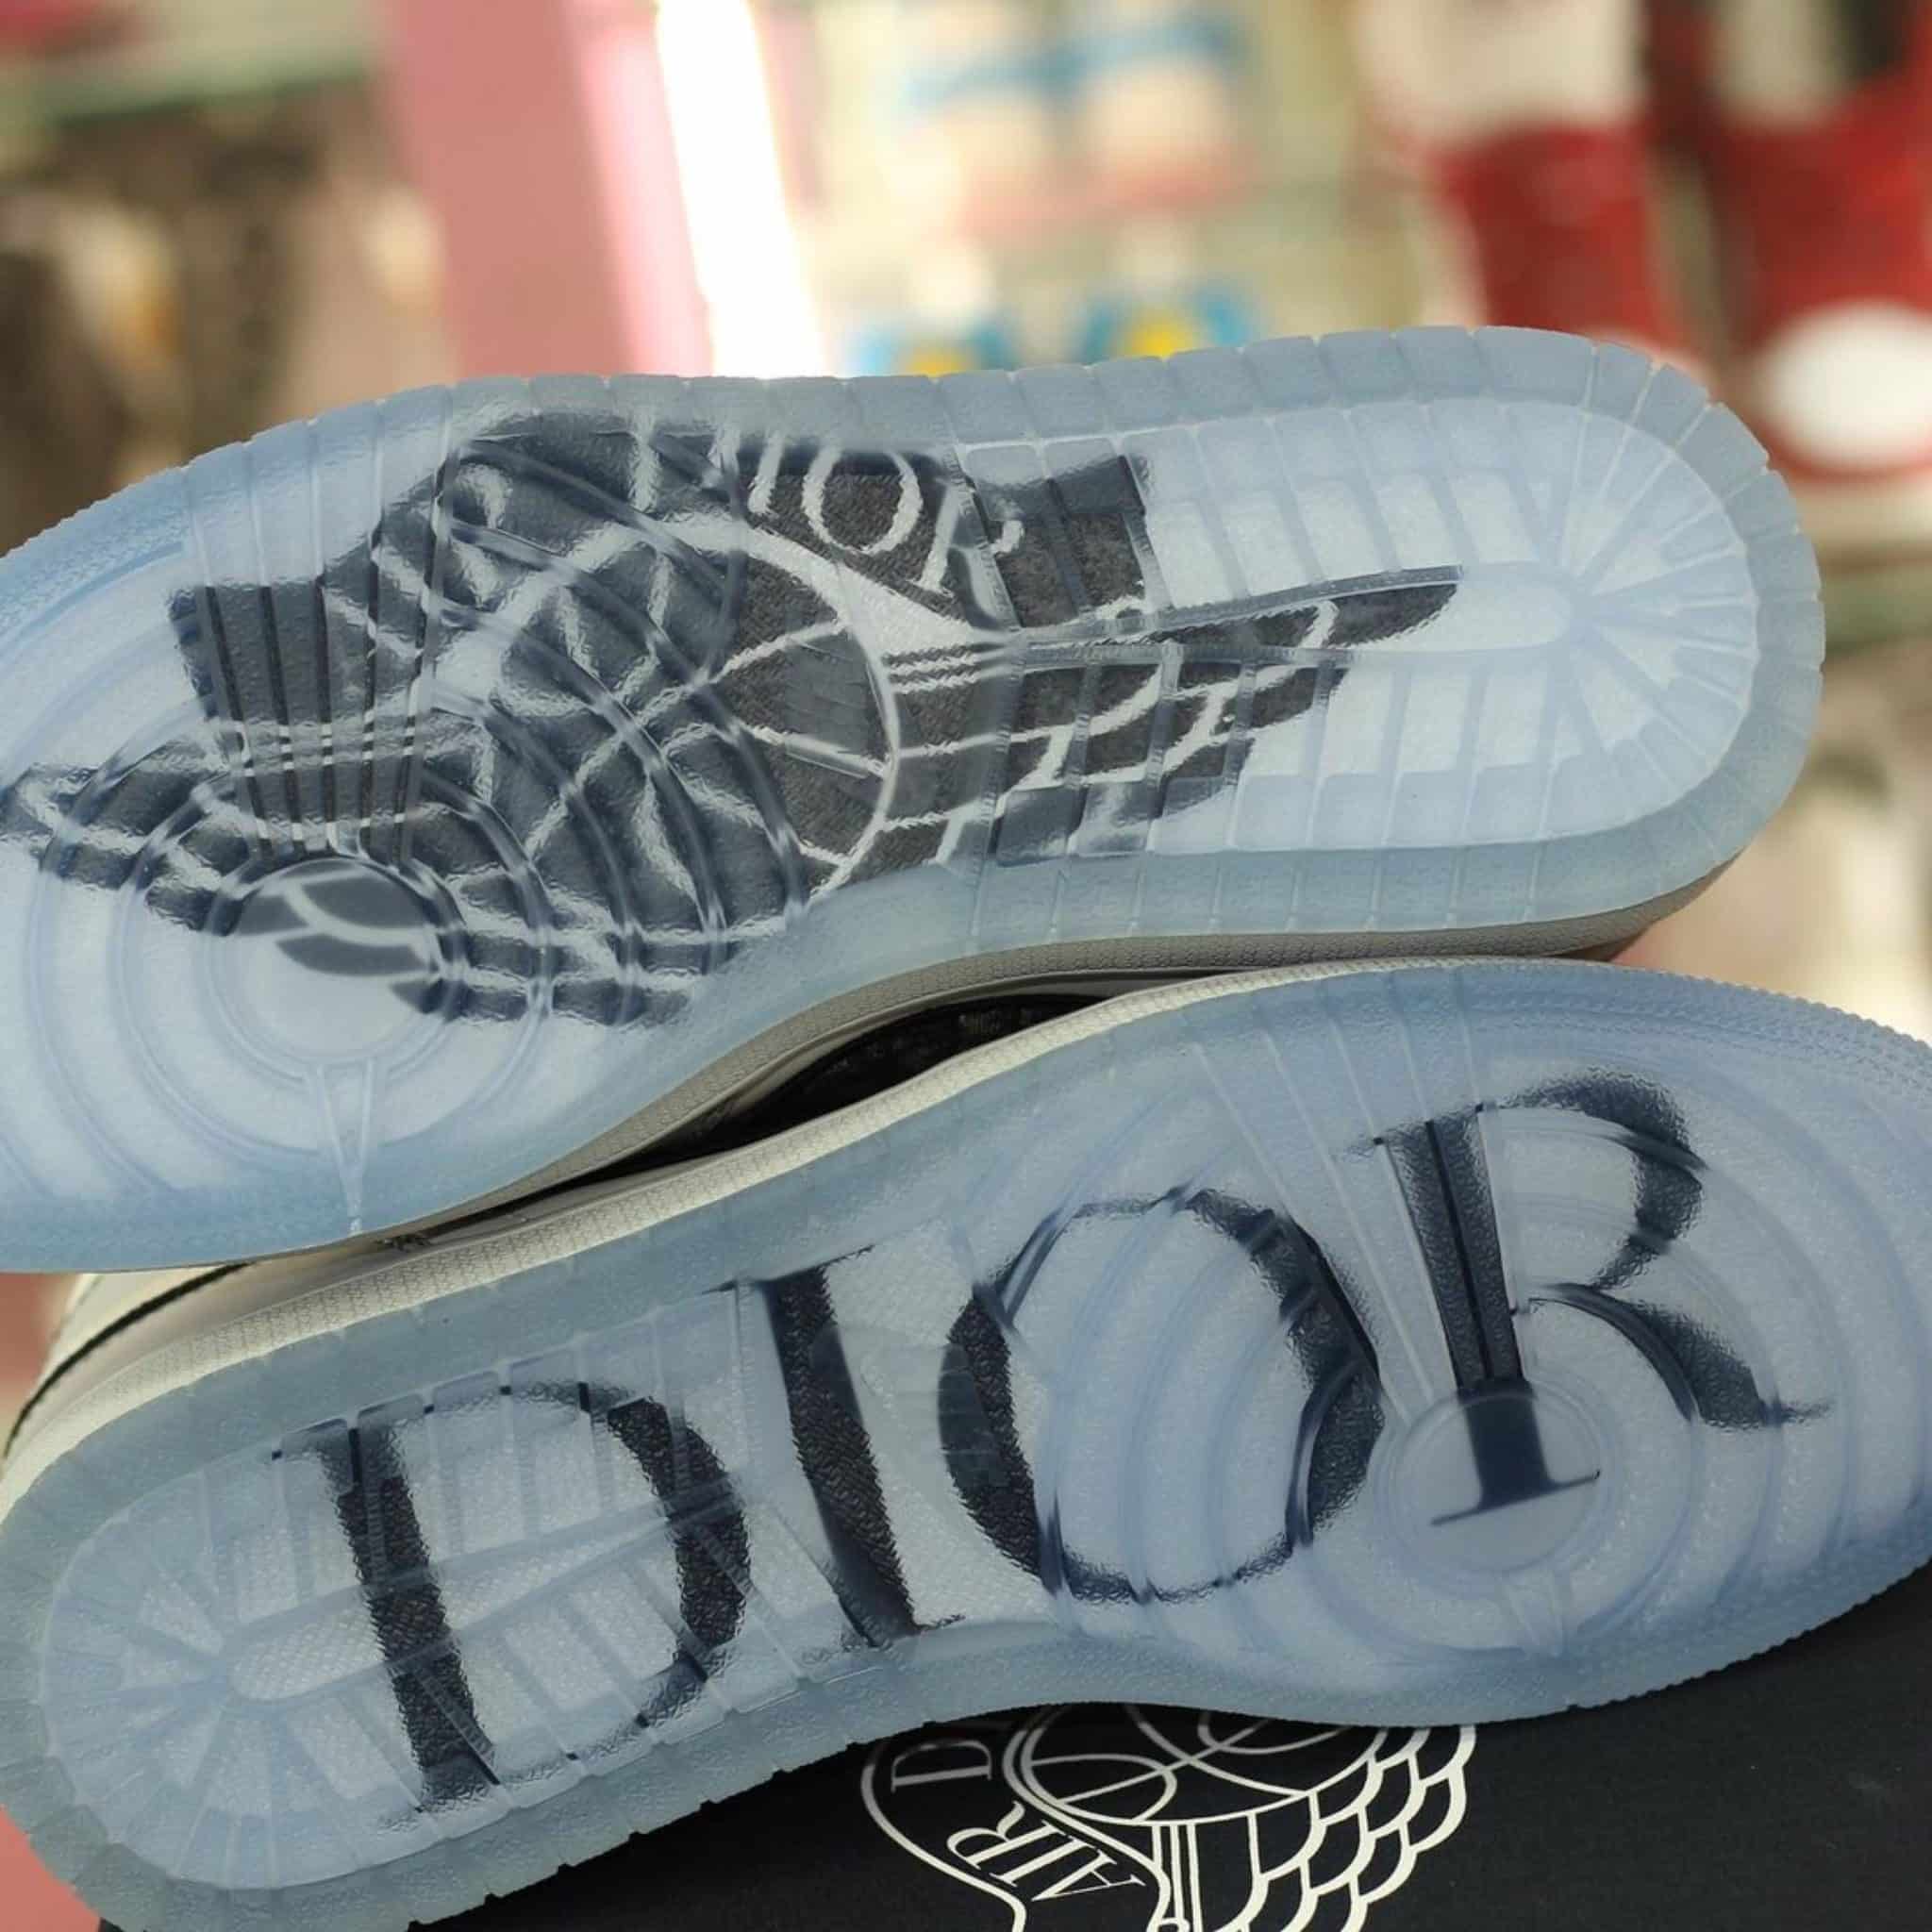 Air Jordan teams with iconic designer christian dior